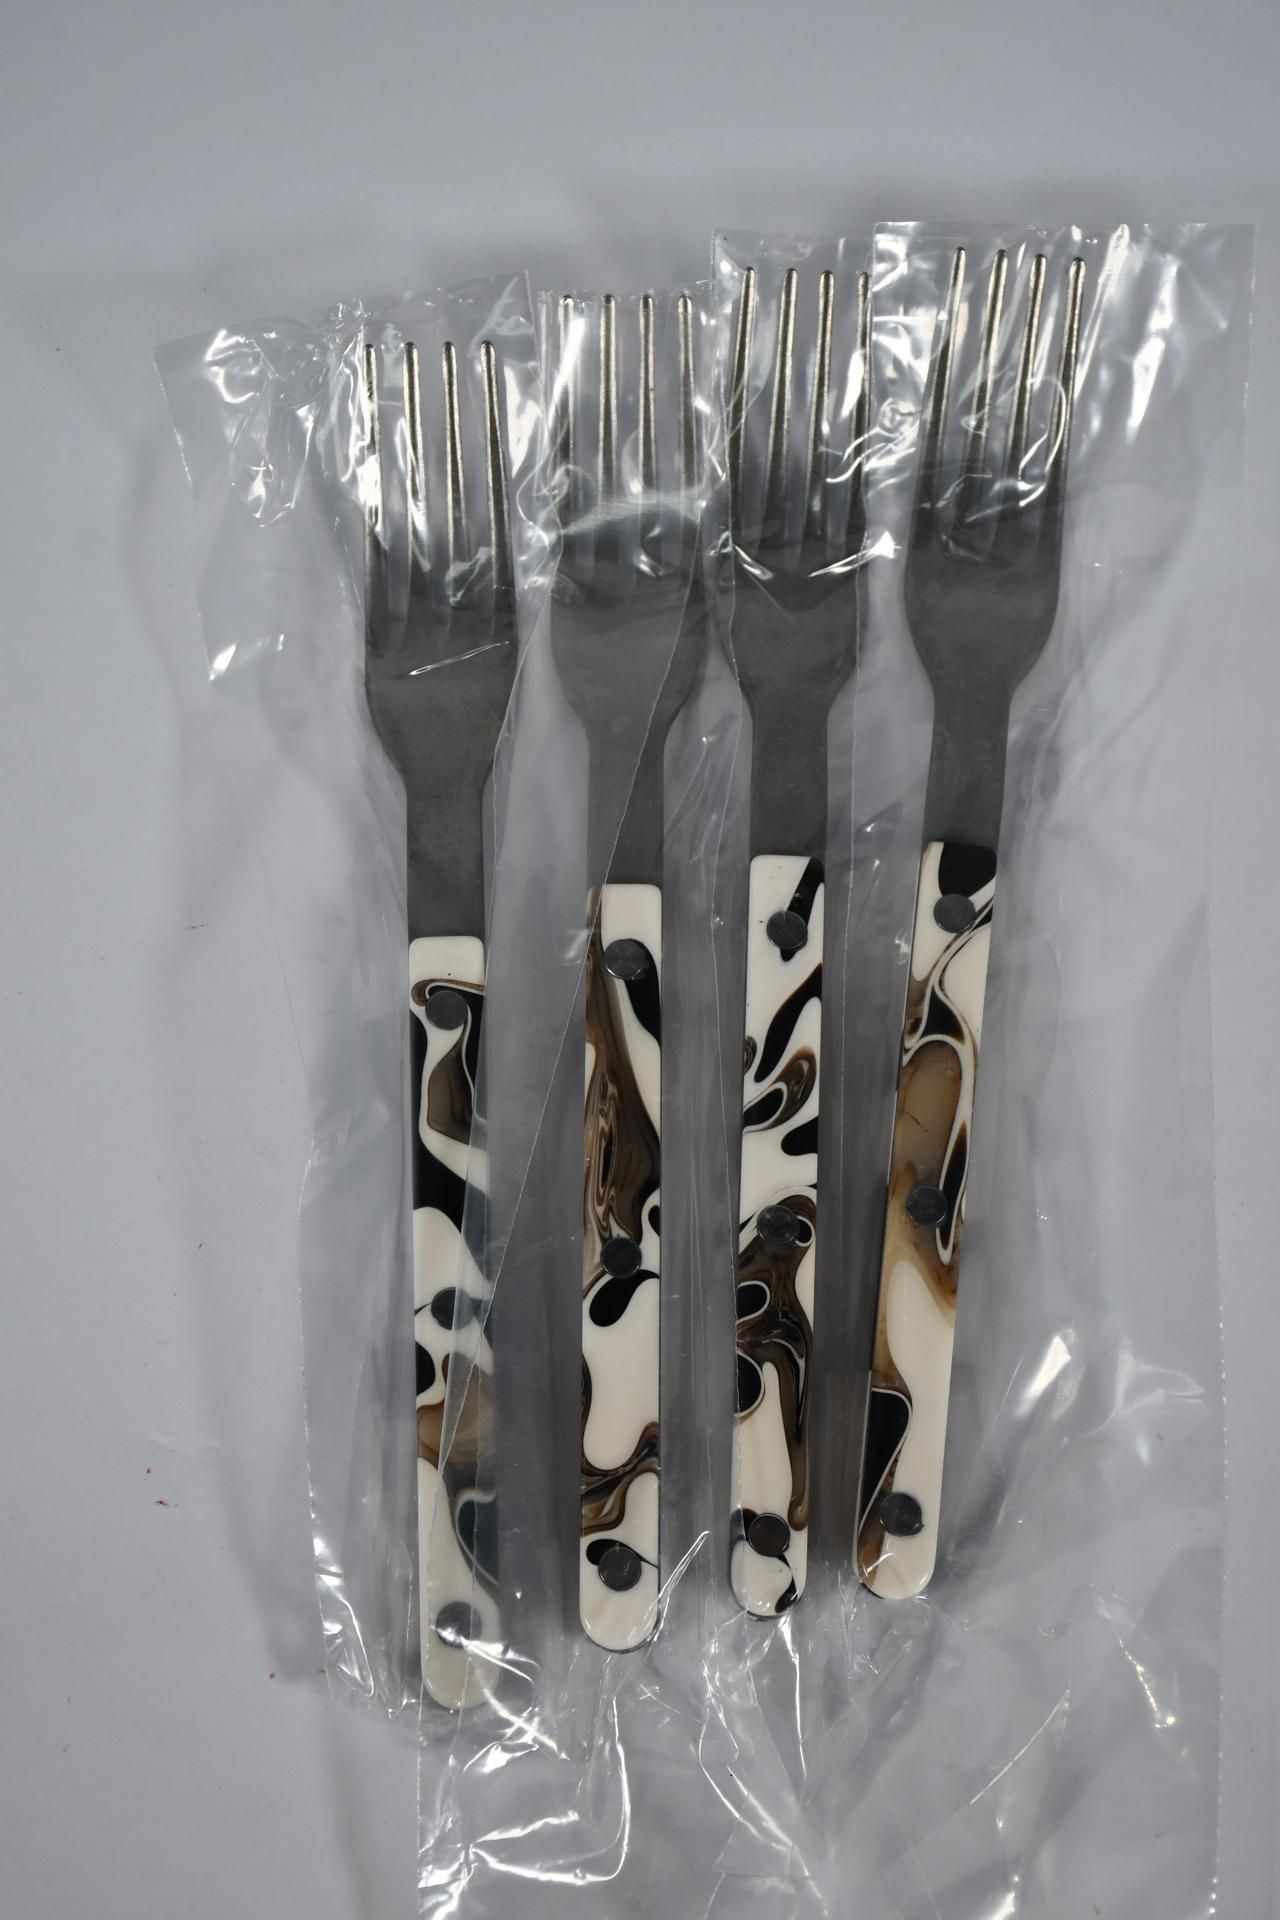 Ten as new Sabre Paris - Bristol Dinner Forks.